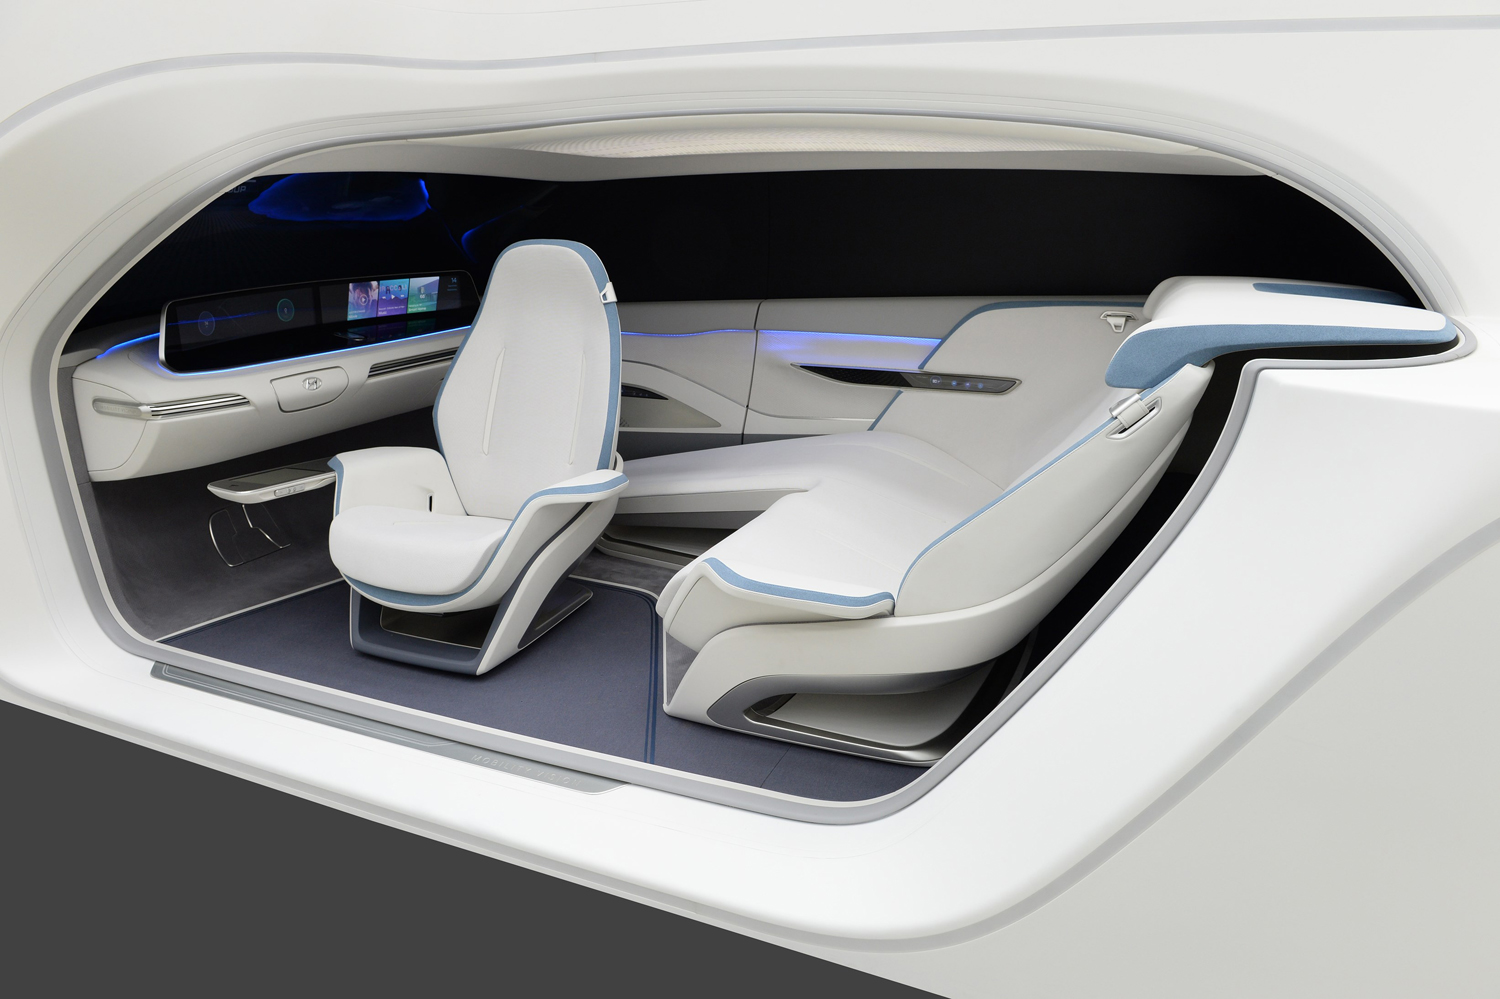 Hyundai Mobility Vision concept